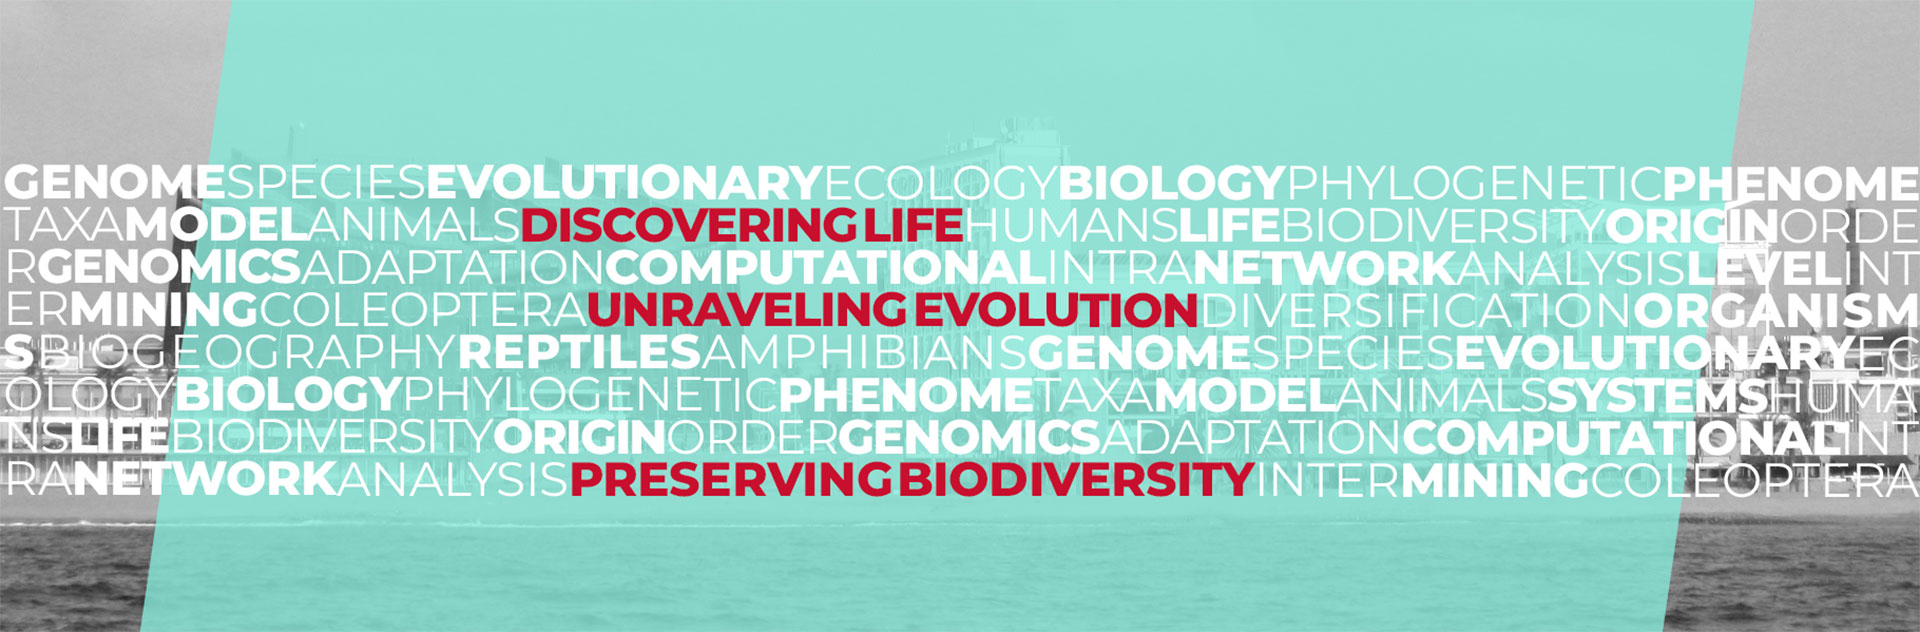 Discovering life - Unraveling Evolution - Preserving Biodiversity